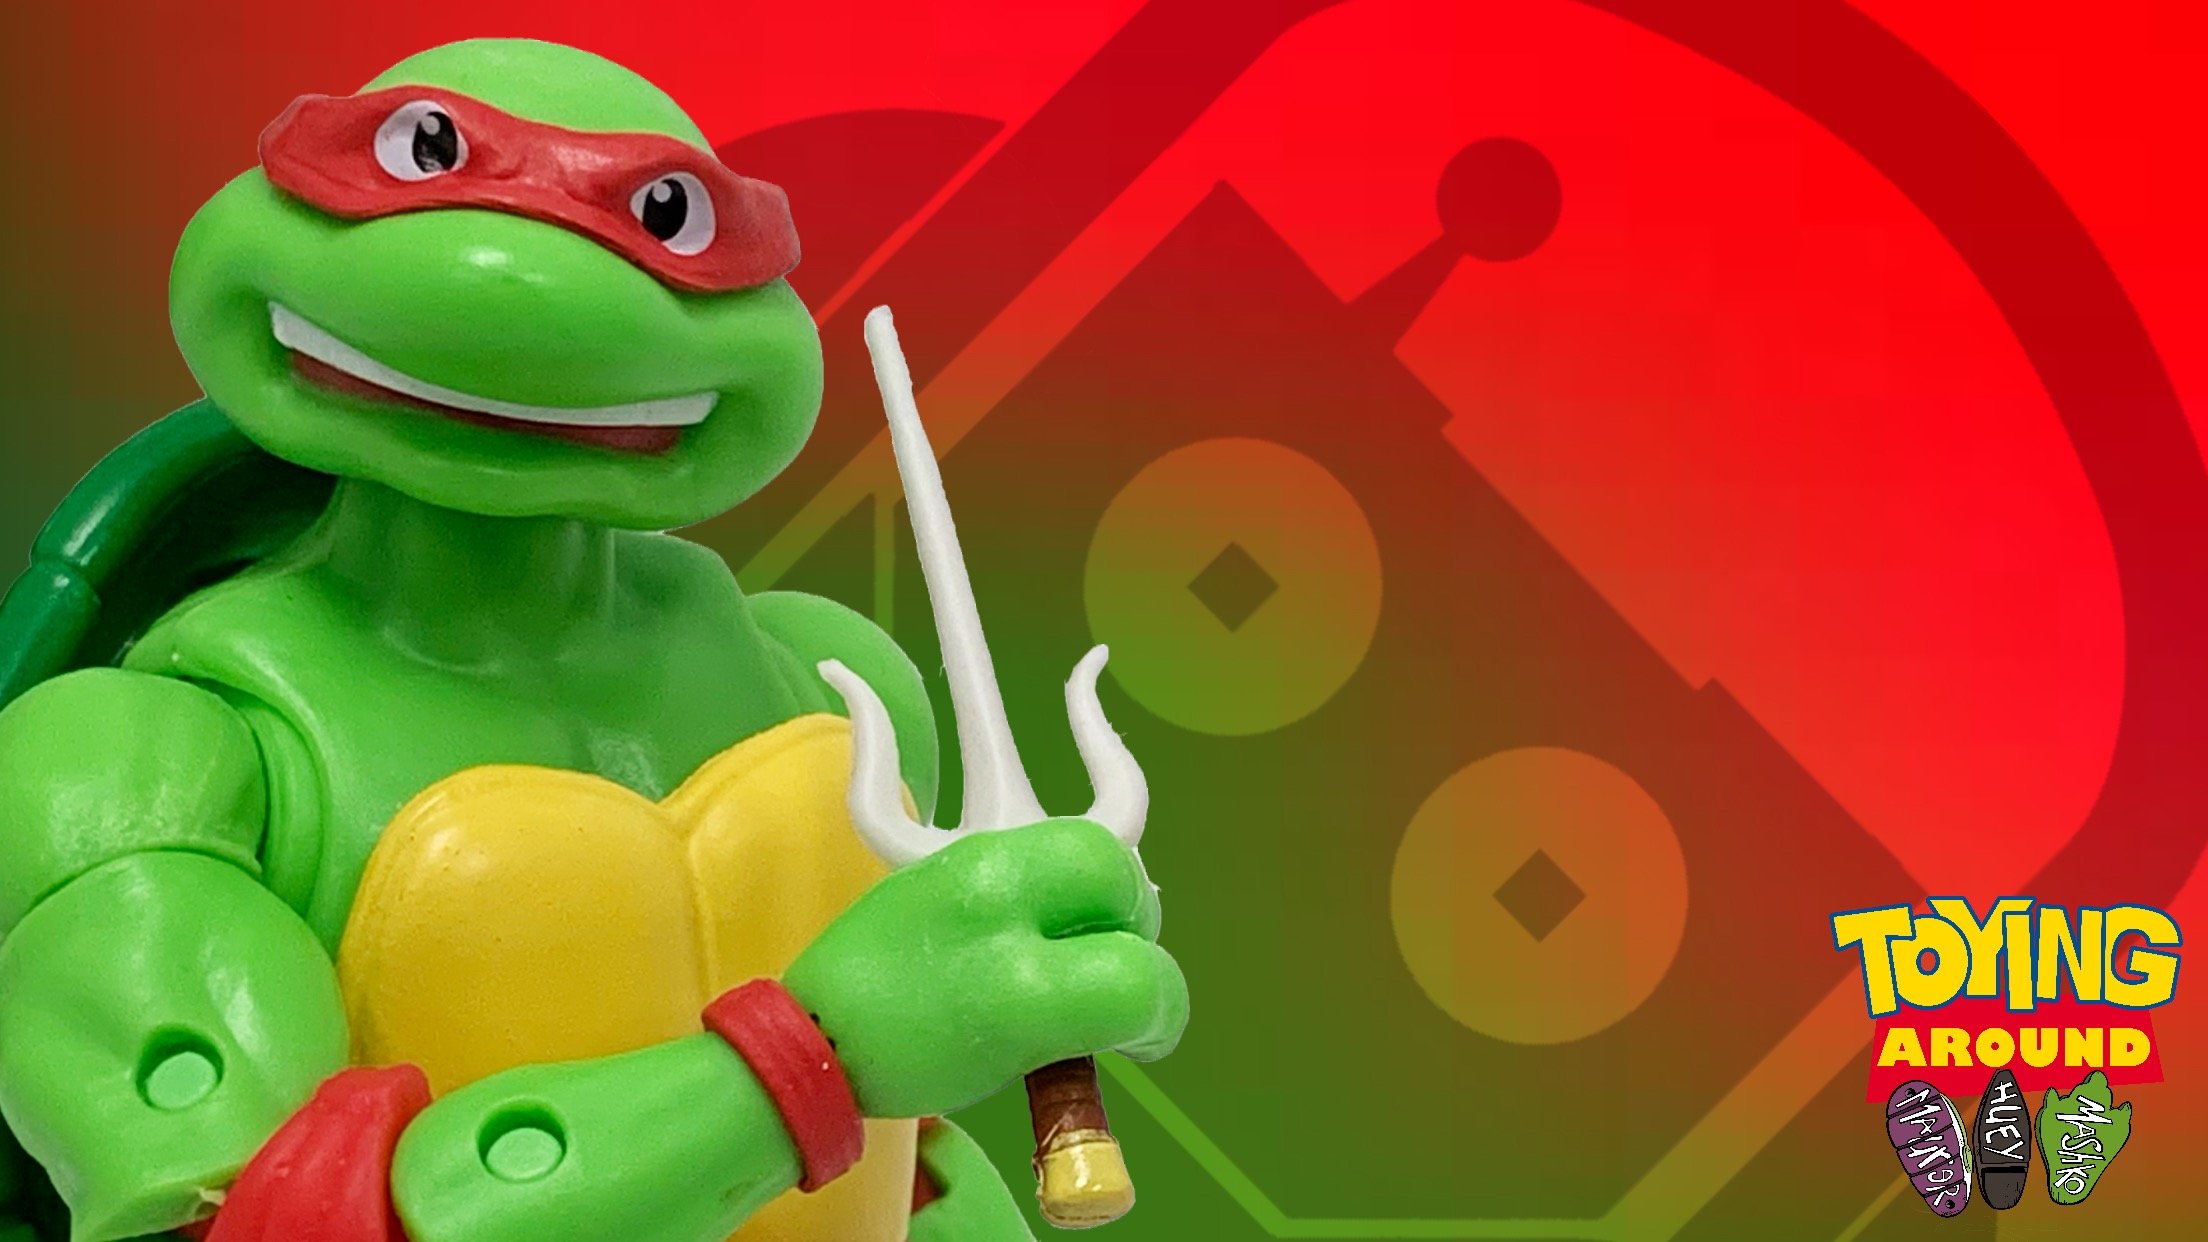 Teenage Mutant Ninja Turtles Raphael 3 Inch Loyal Subjects Action Vinyl for sale online 